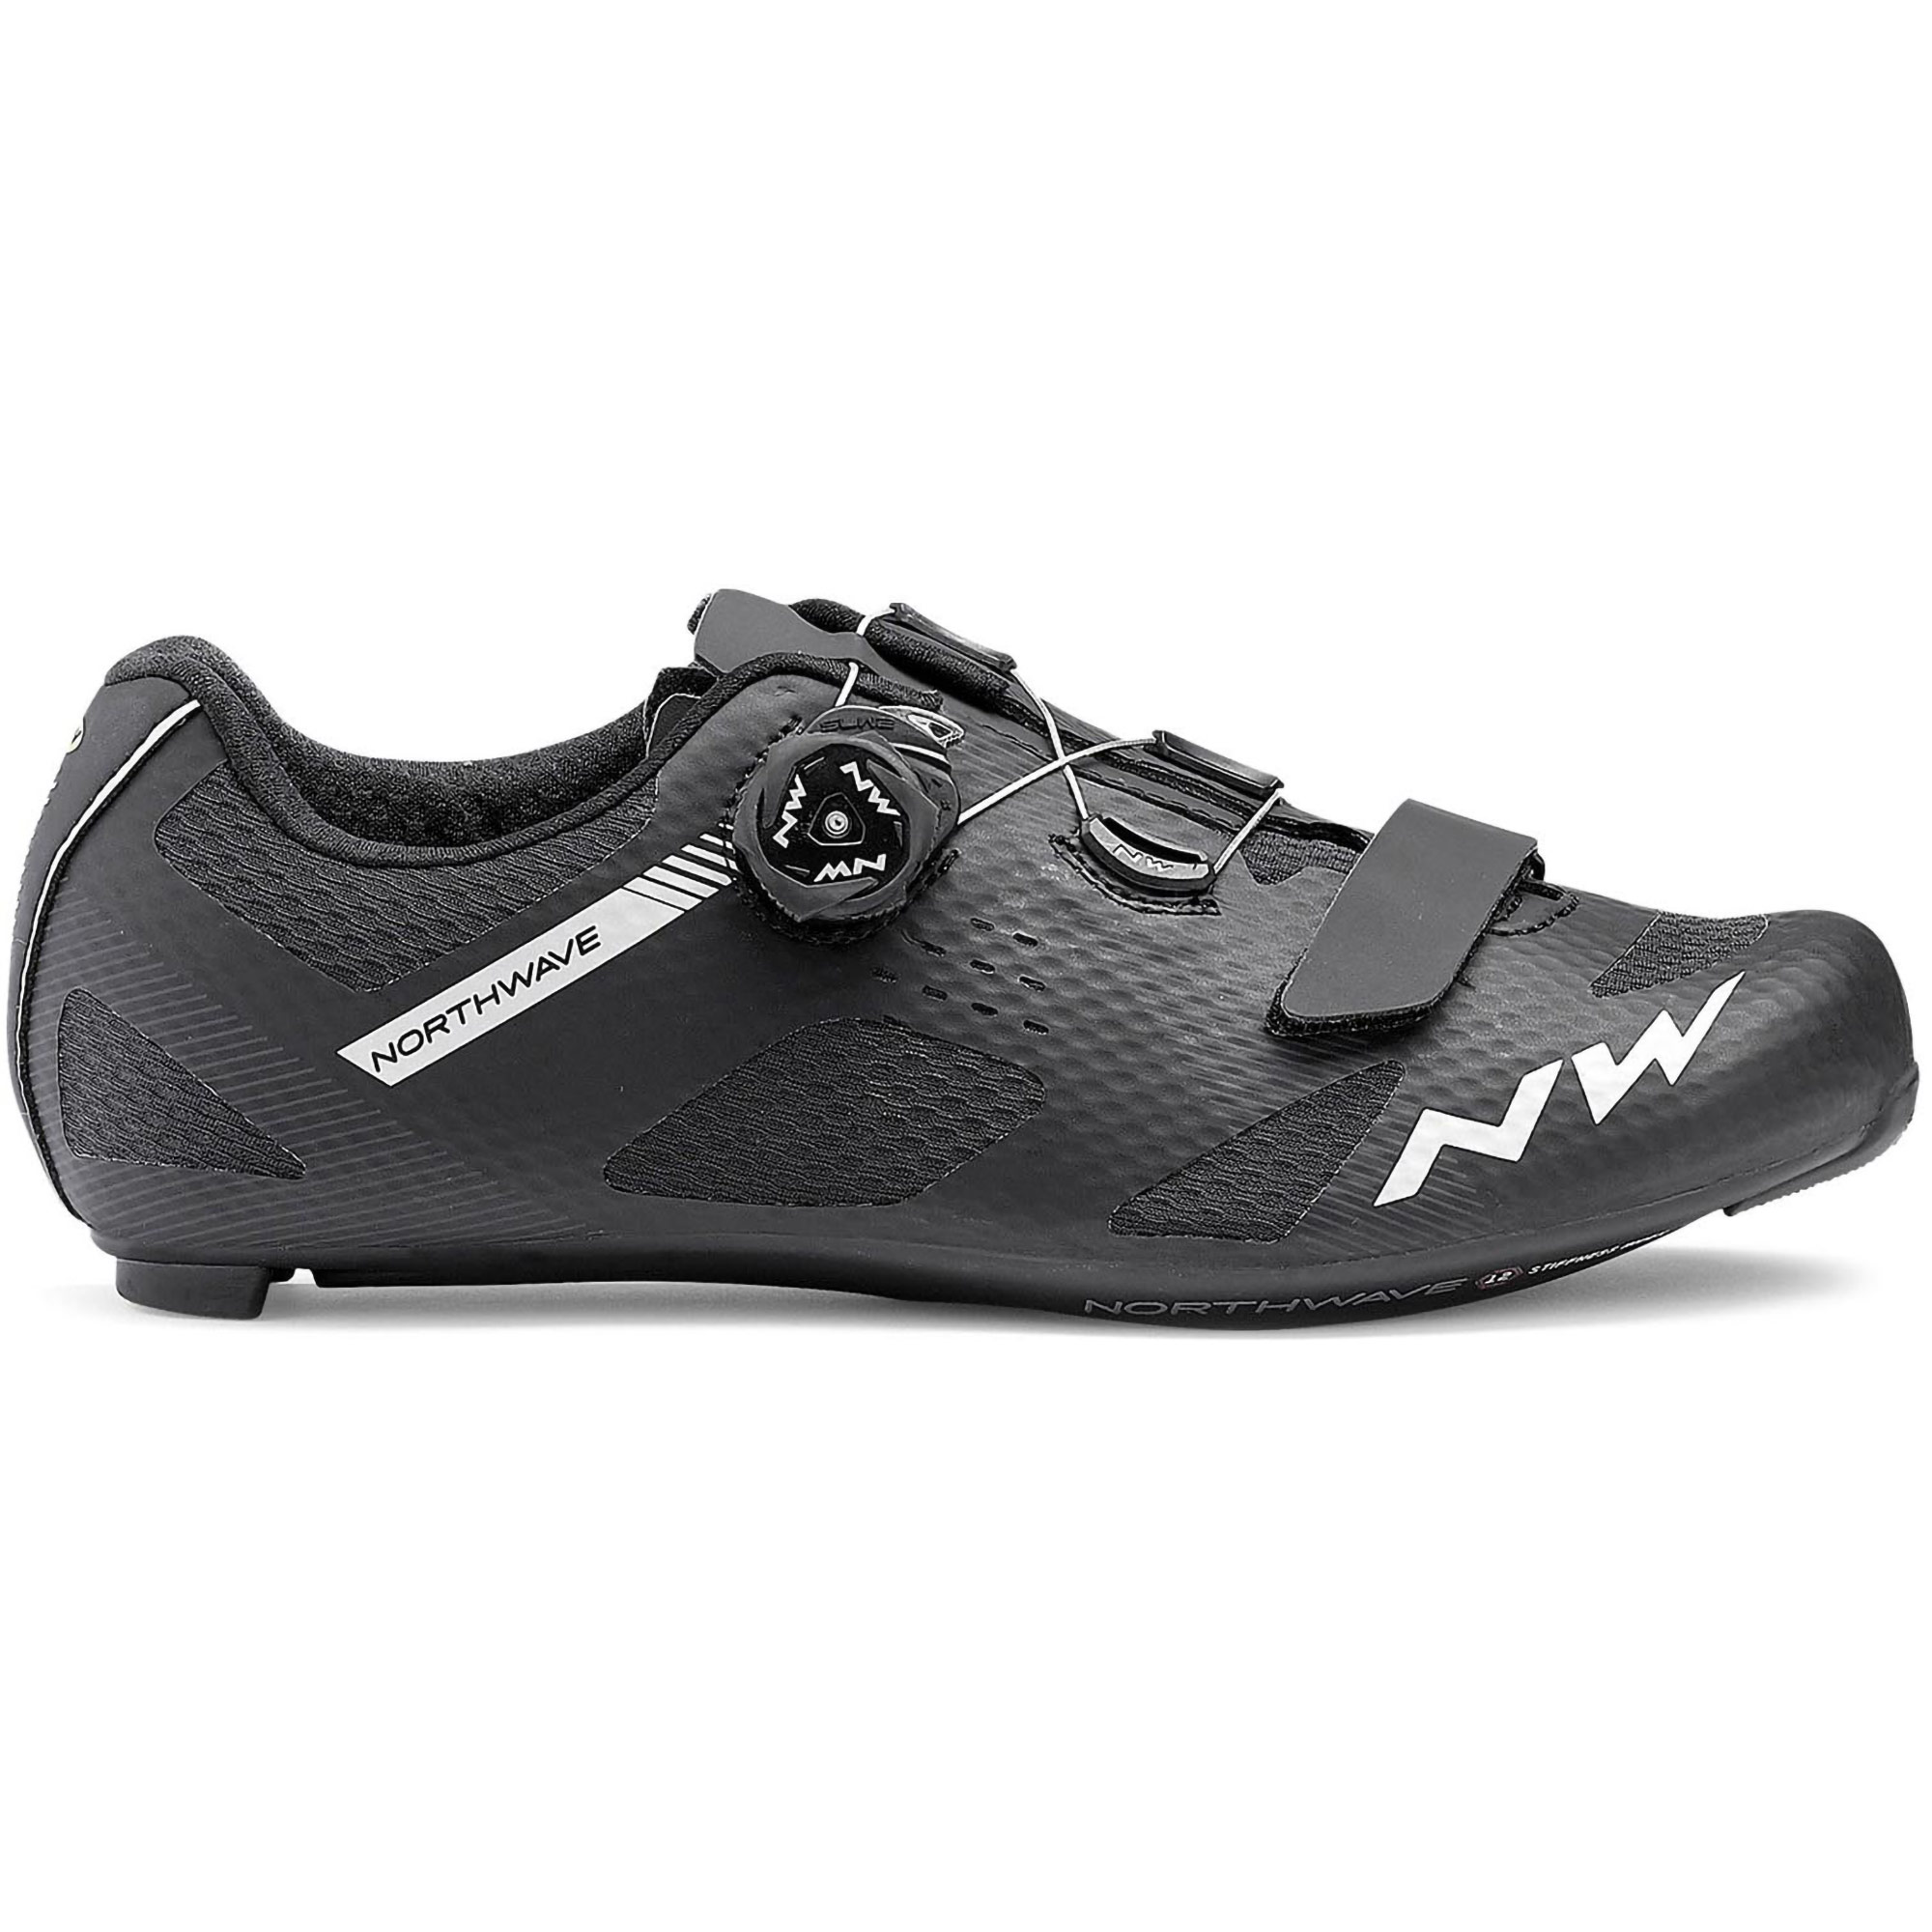 Northwave Storm Carbon Road Cycling Bike Shoes Footwear eBay